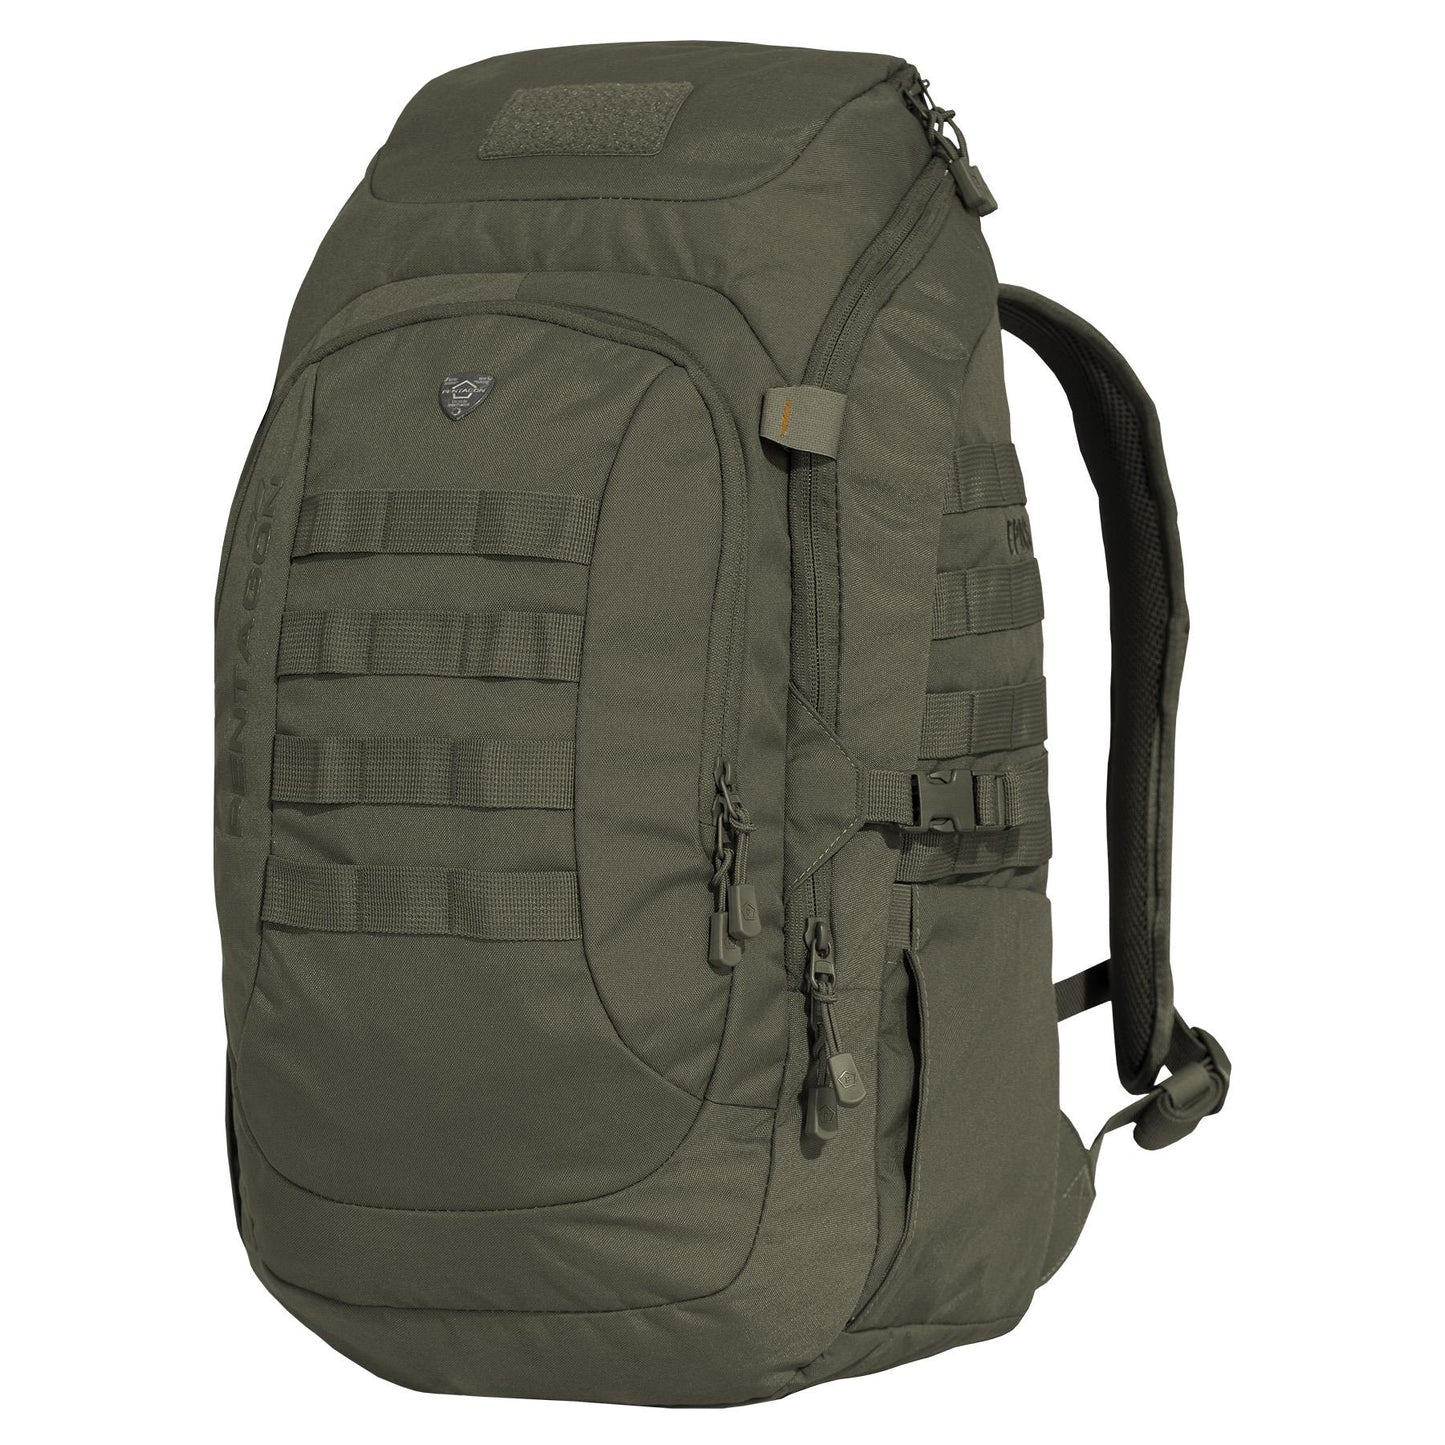 Pentagon Epos Backpack - 40L